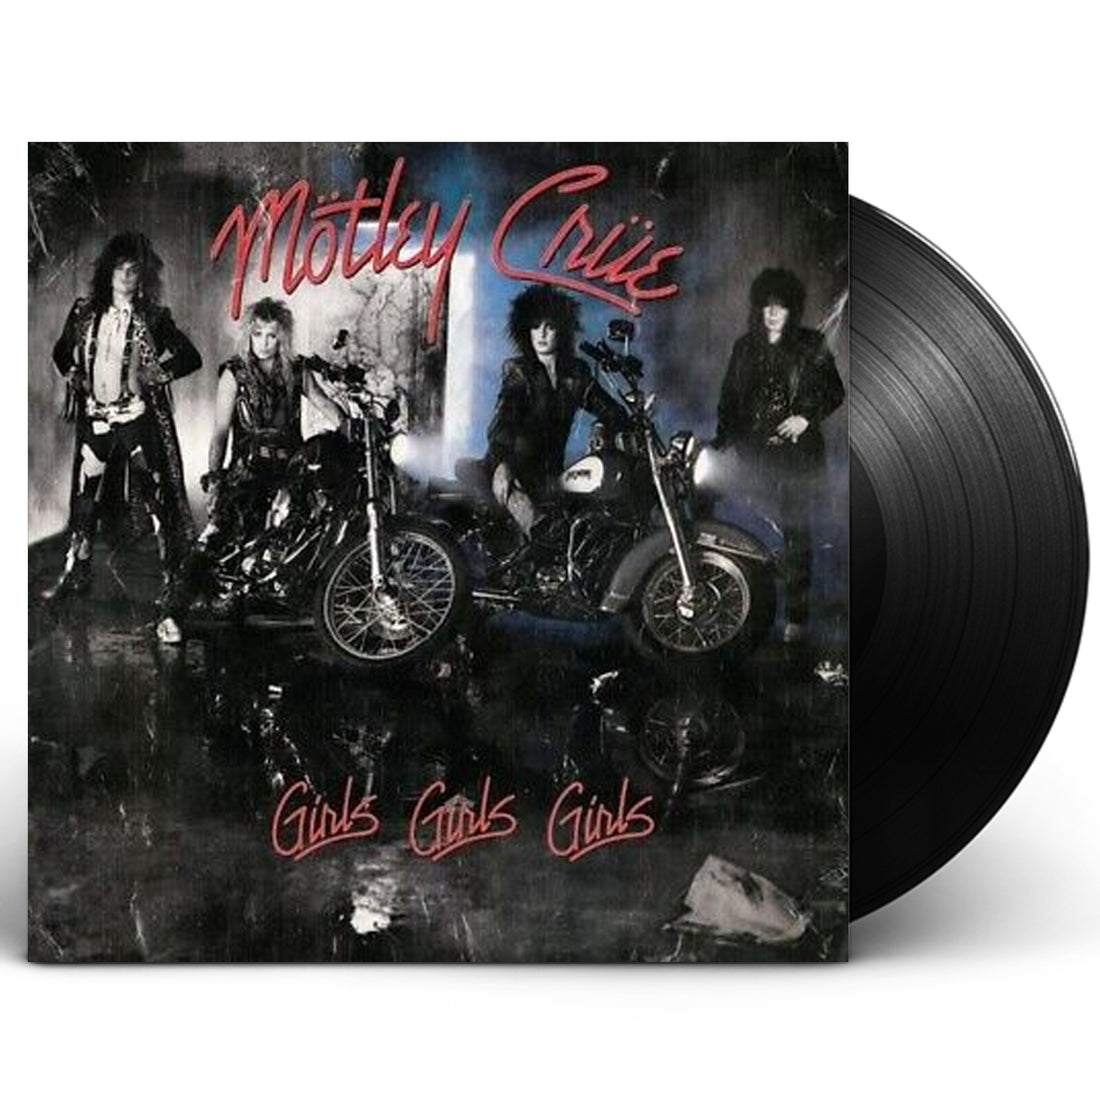 Motley Crue "Girls, Girls, Girls" LP Vinyl